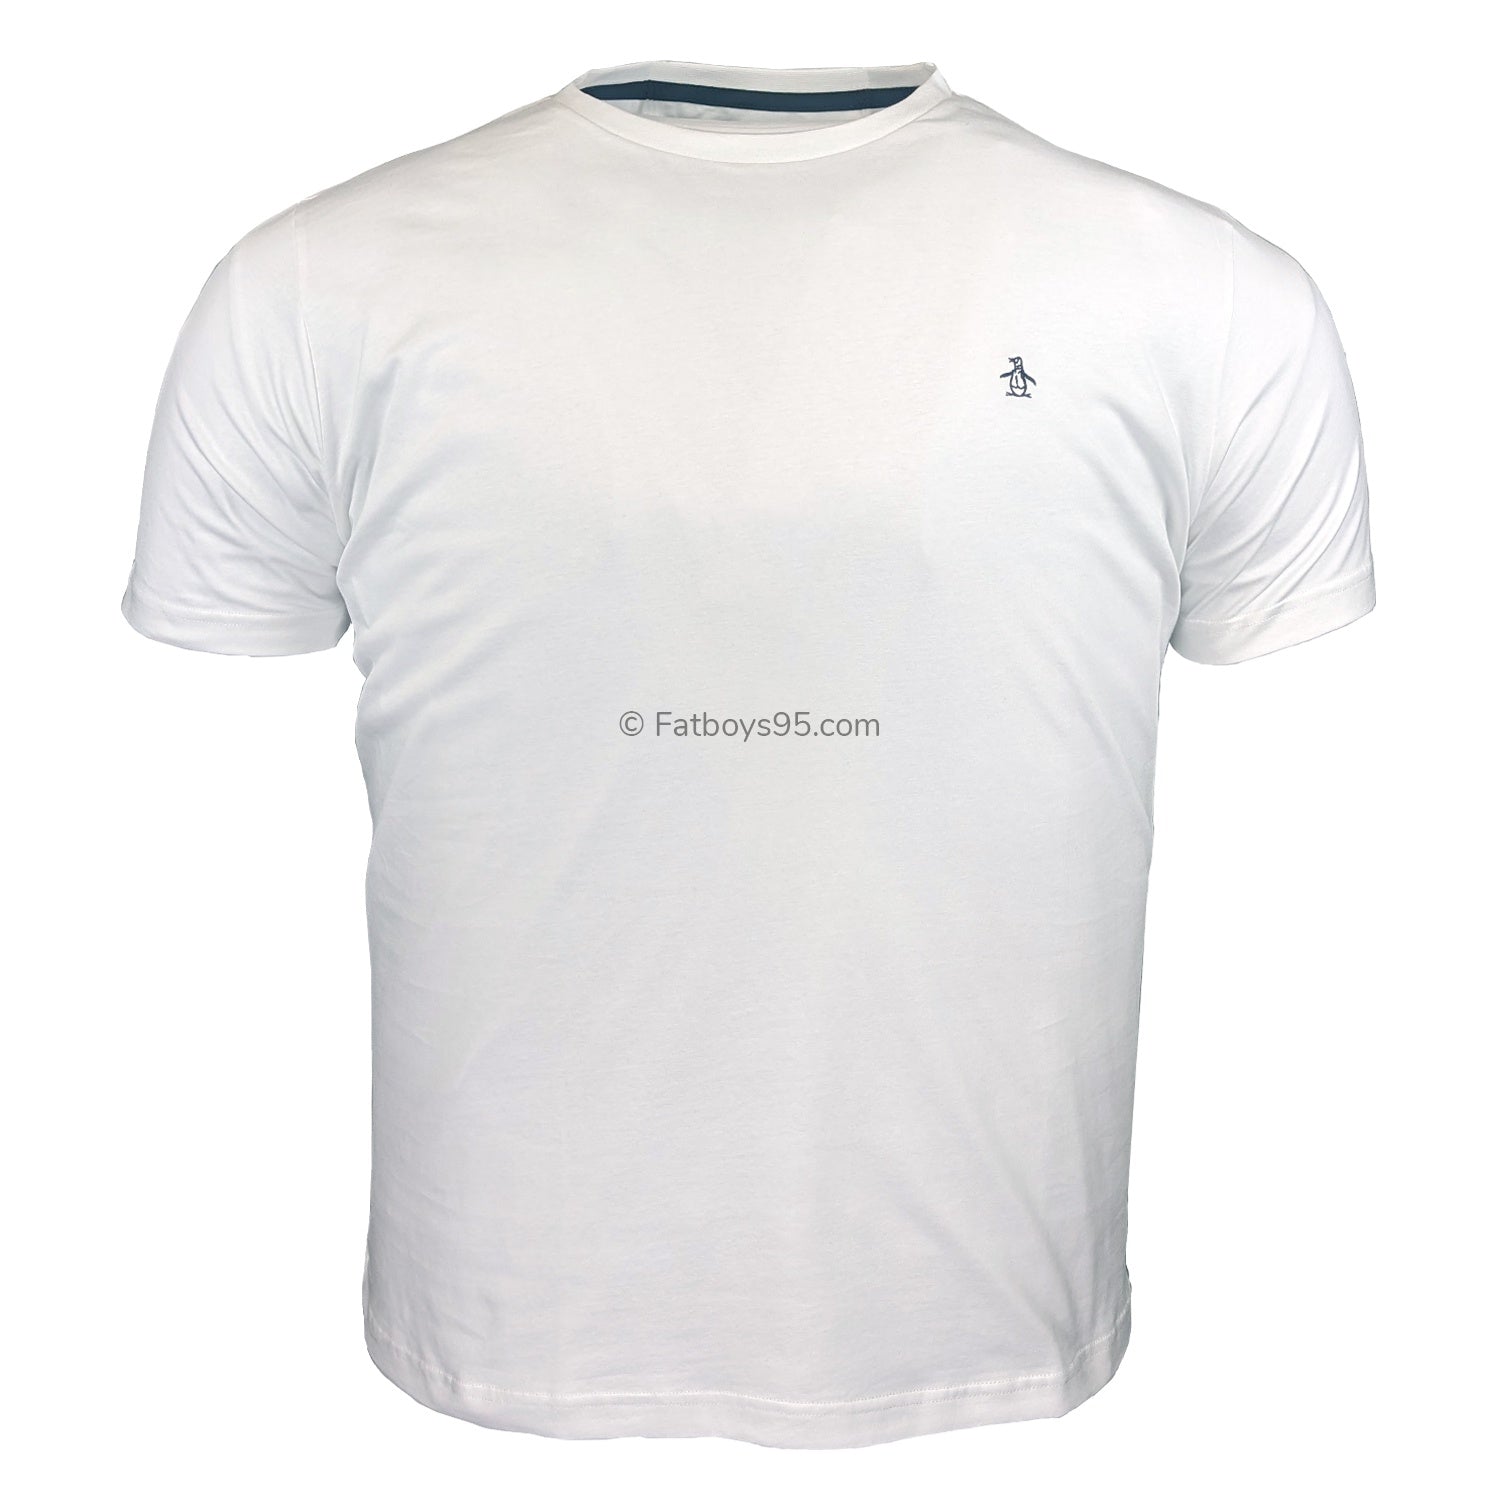 Penguin T-Shirt - OJKB0903 - Bright White 1